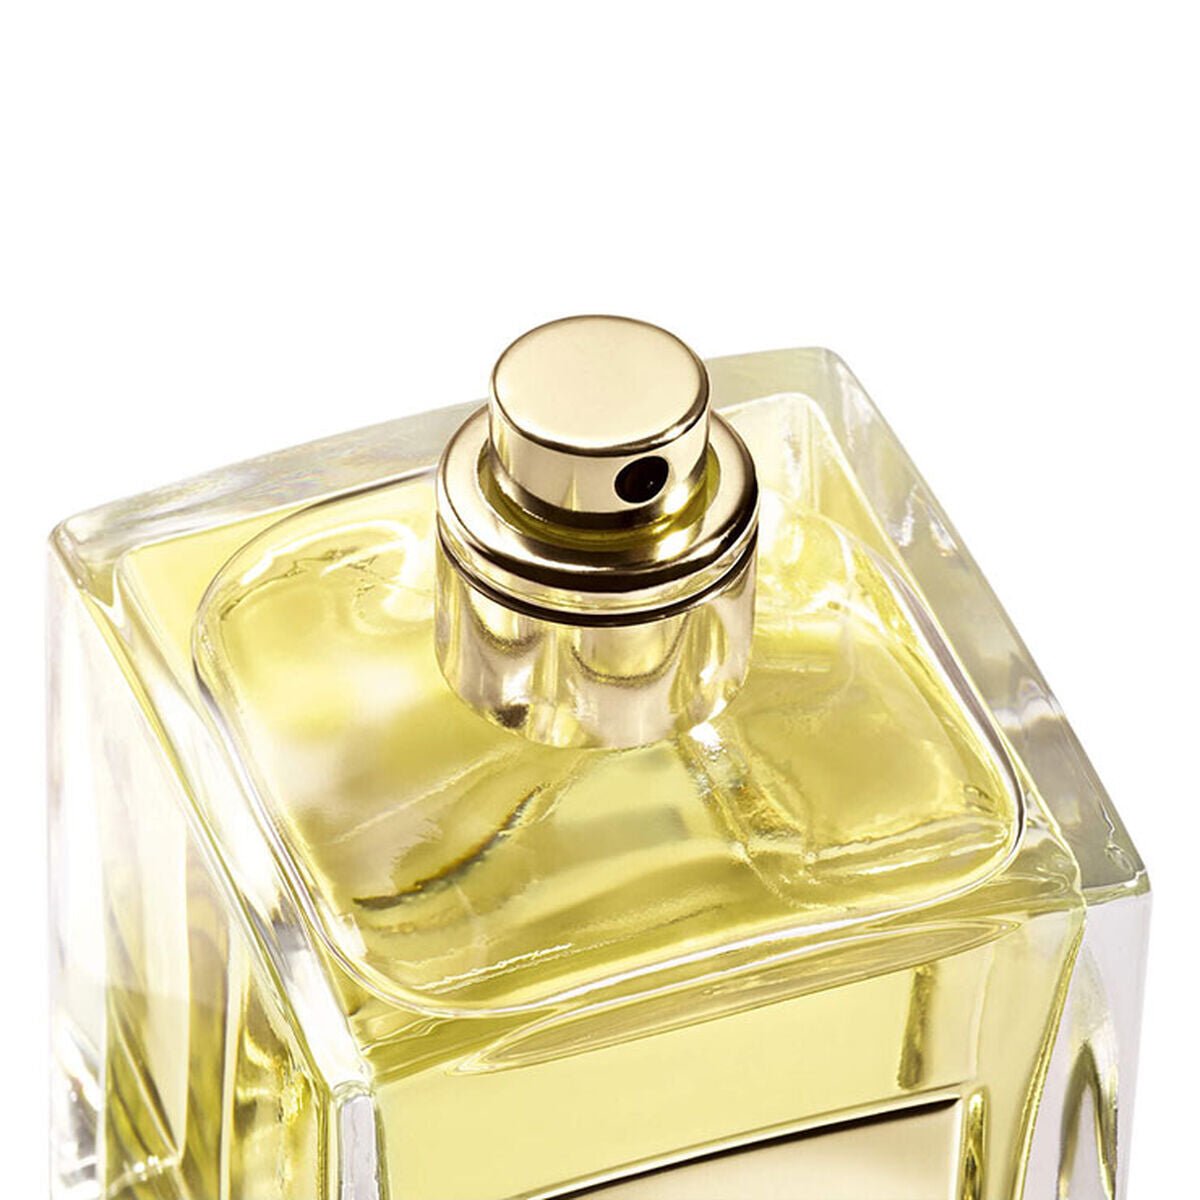 Giorgio Armani Prive Orangerie Venise EDT | My Perfume Shop Australia